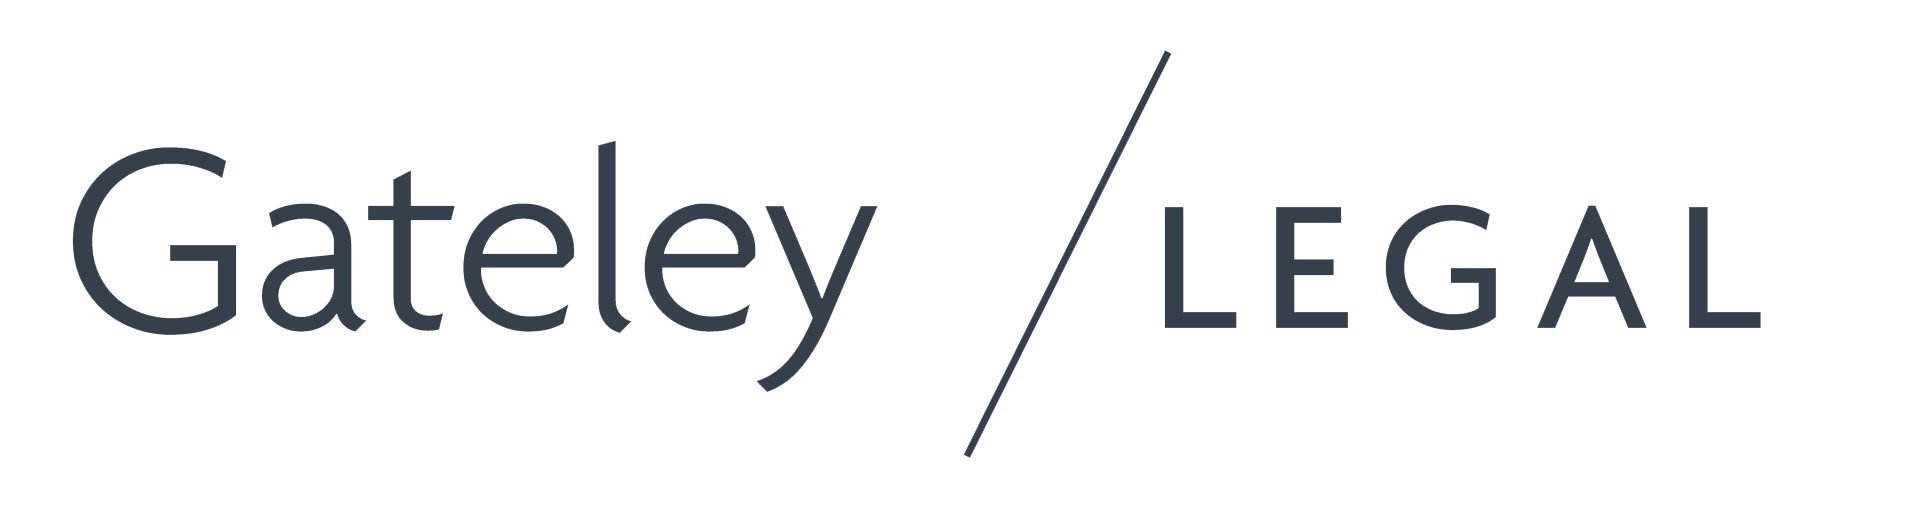 Gateley-Legal_grey_CMYK-transparent